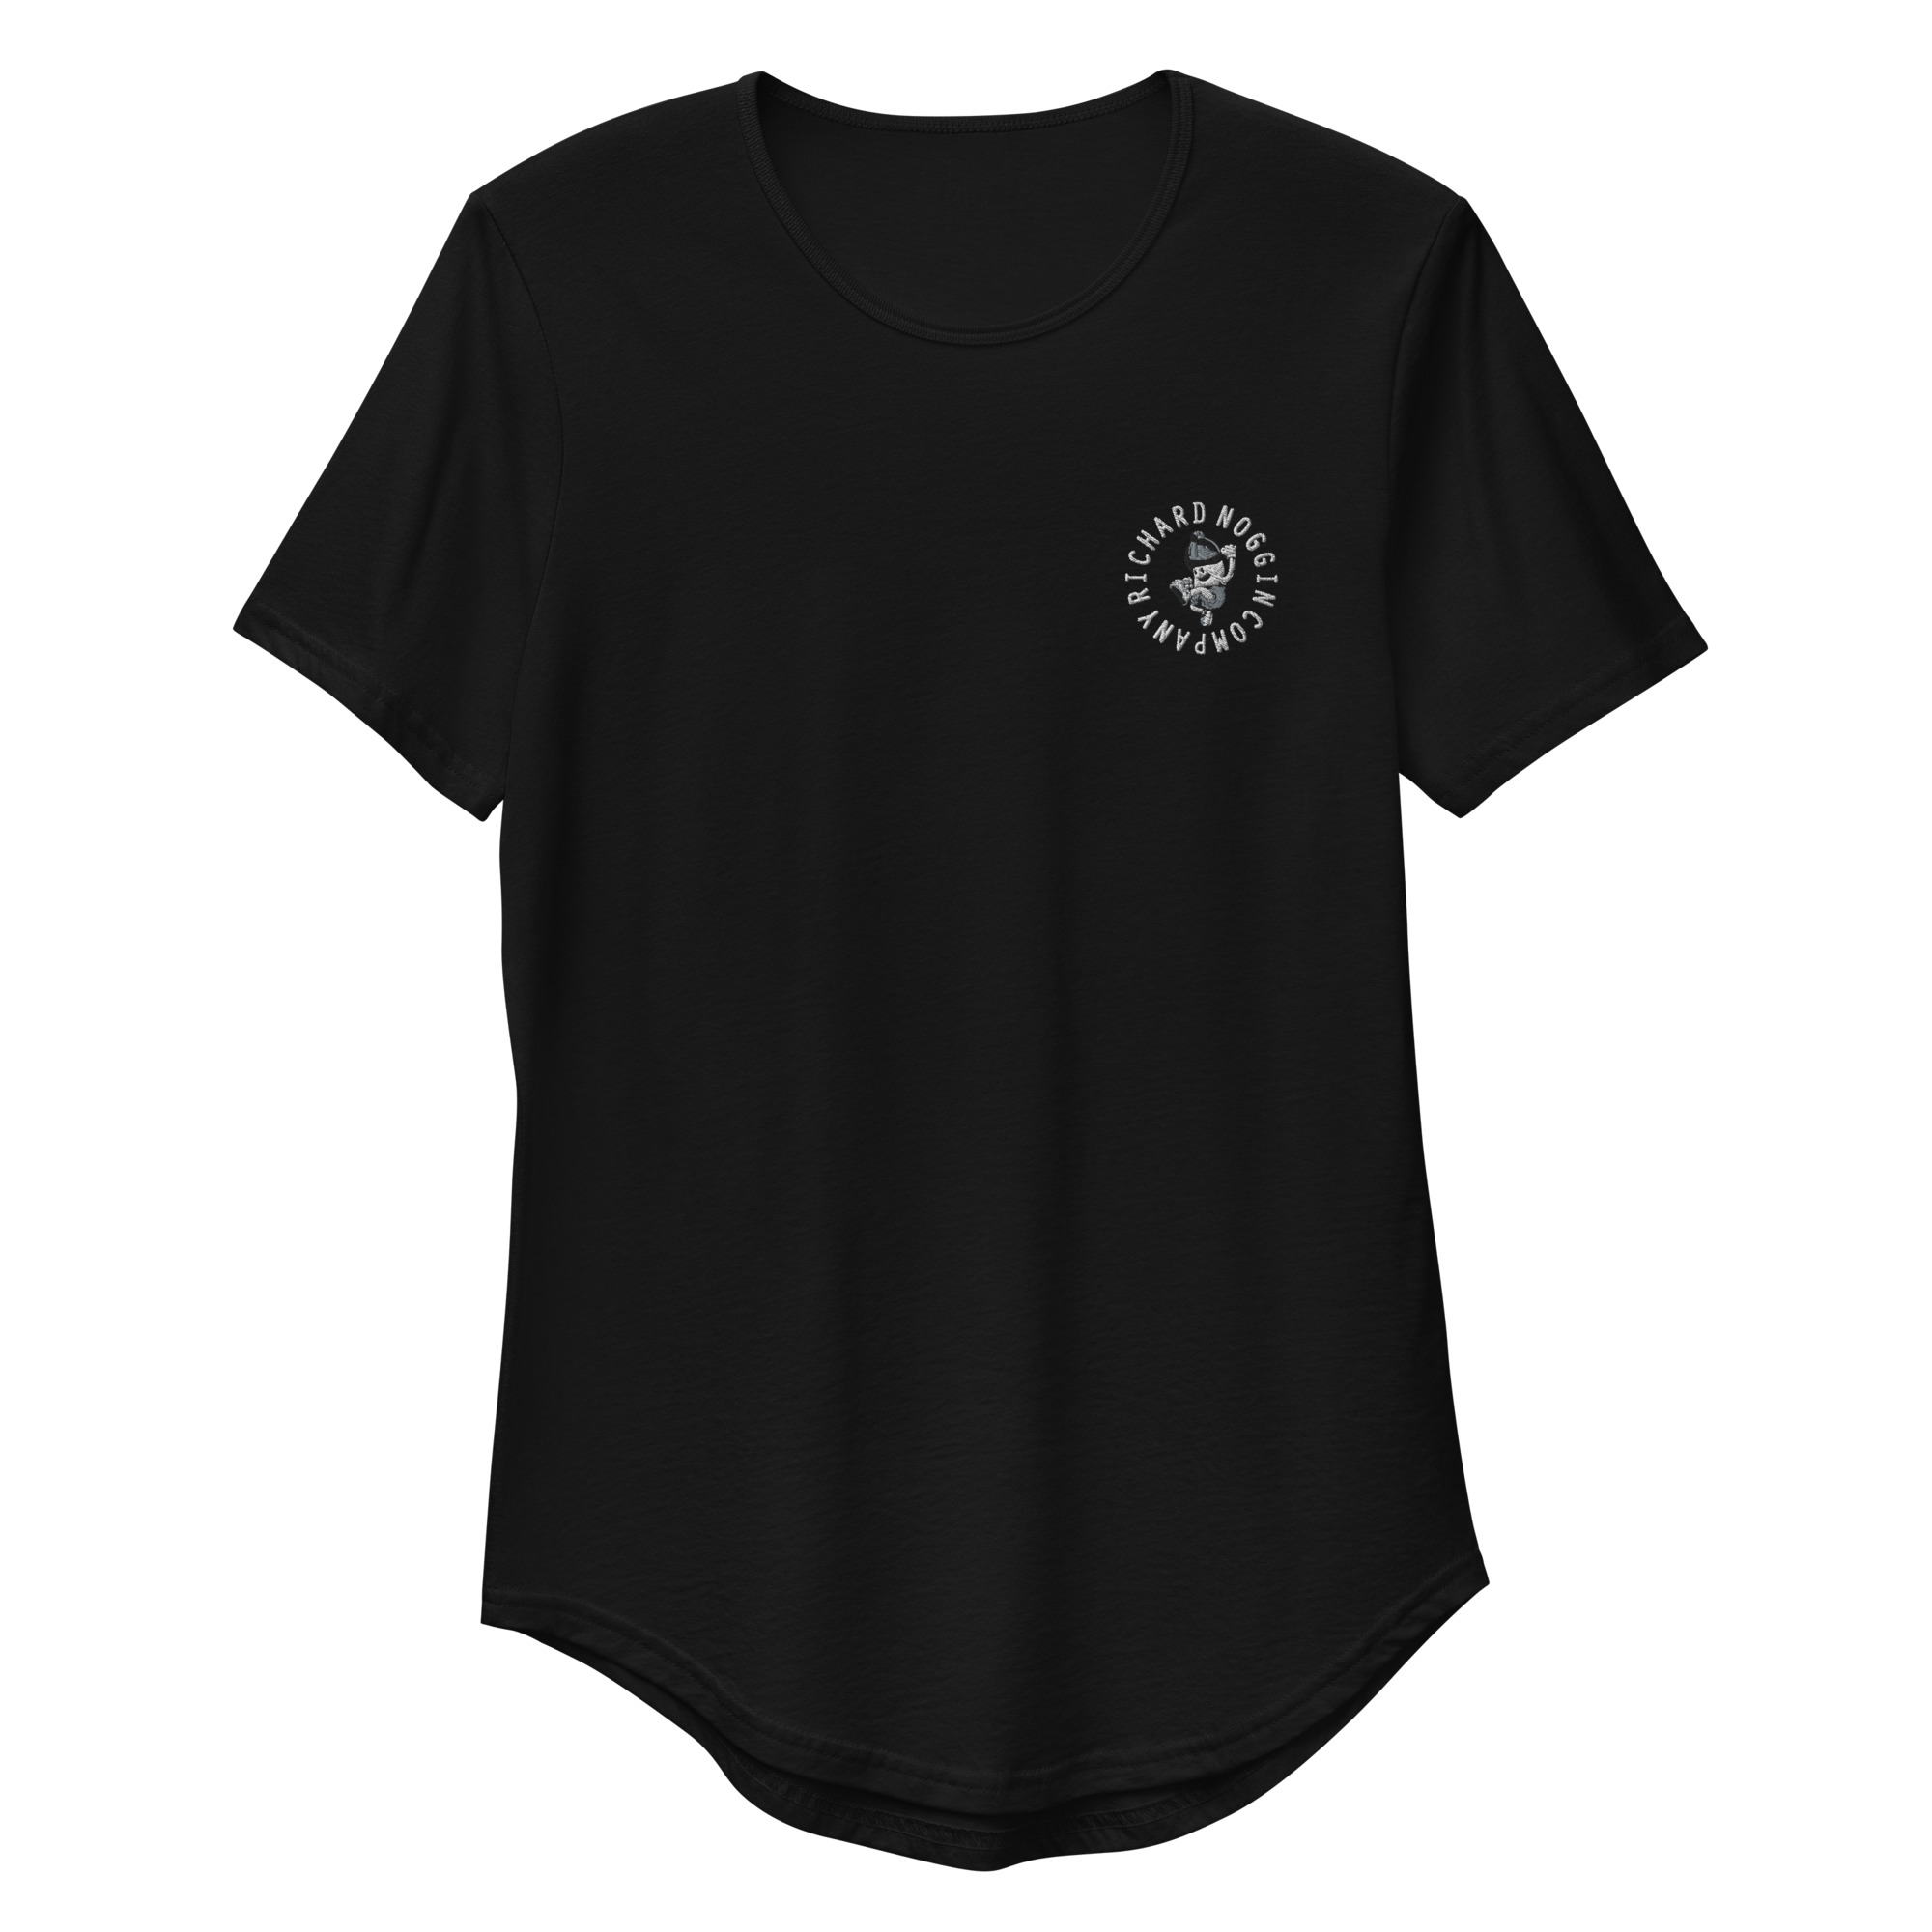 mens-curved-hem-t-shirt-black-front-648b1dfb567c6-1.jpg